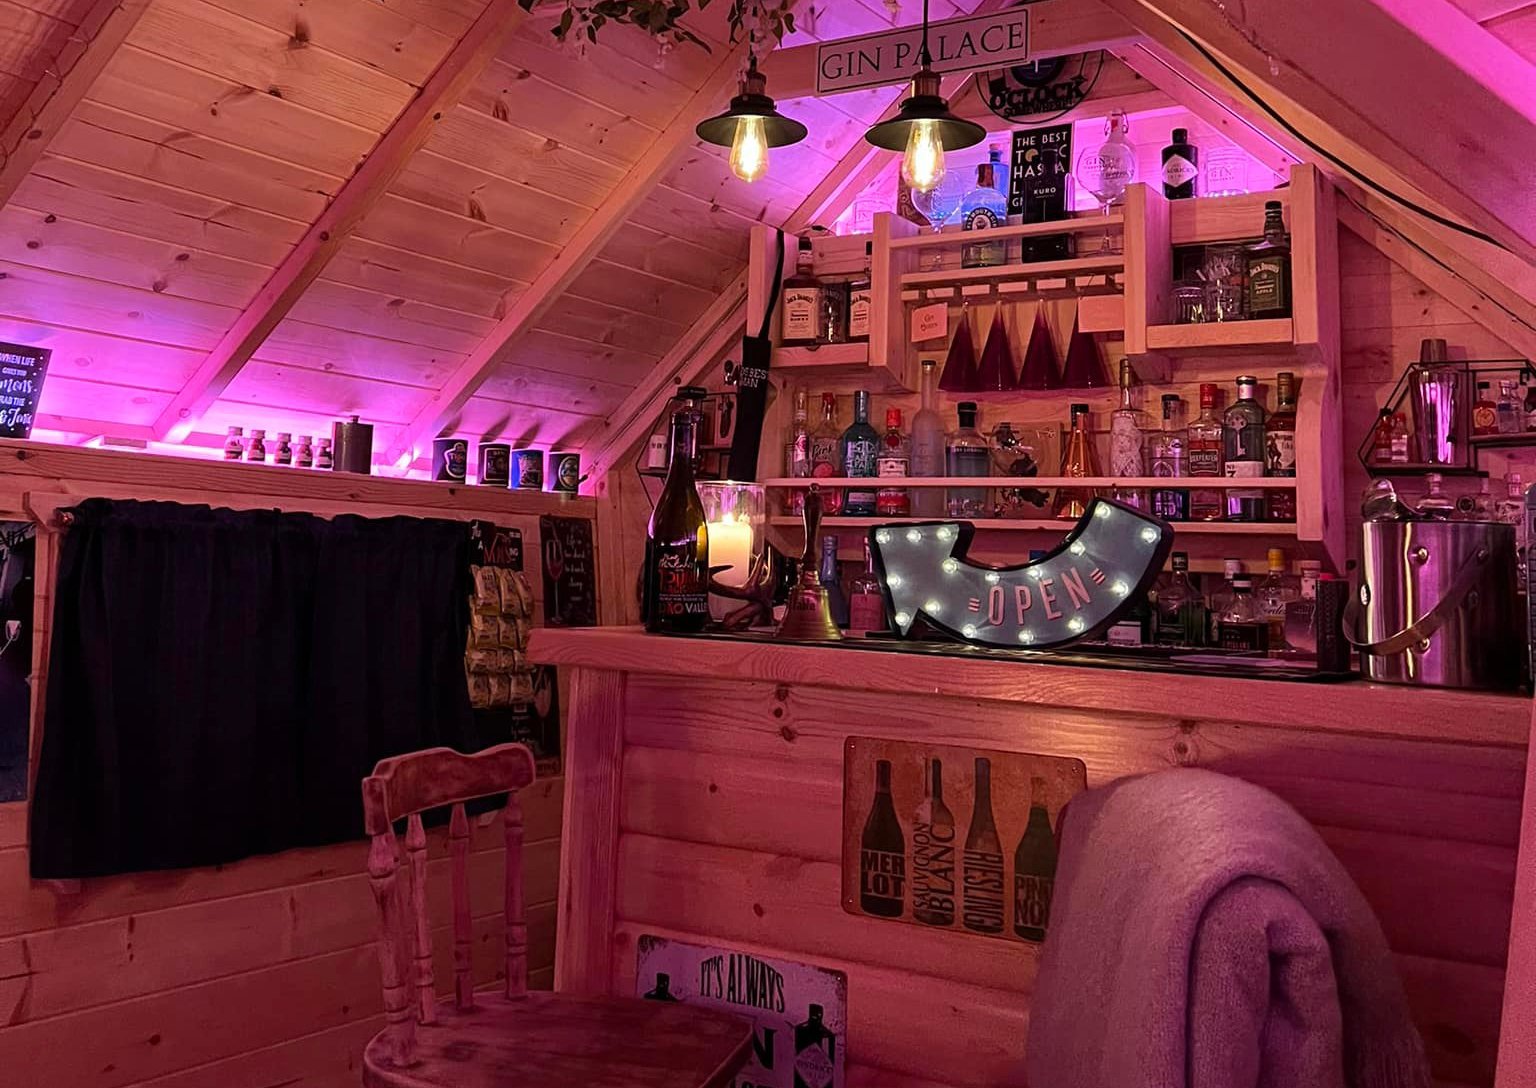 Arctic Cabin garden bar inside, featuring bar, drinks rack and 'open' sign